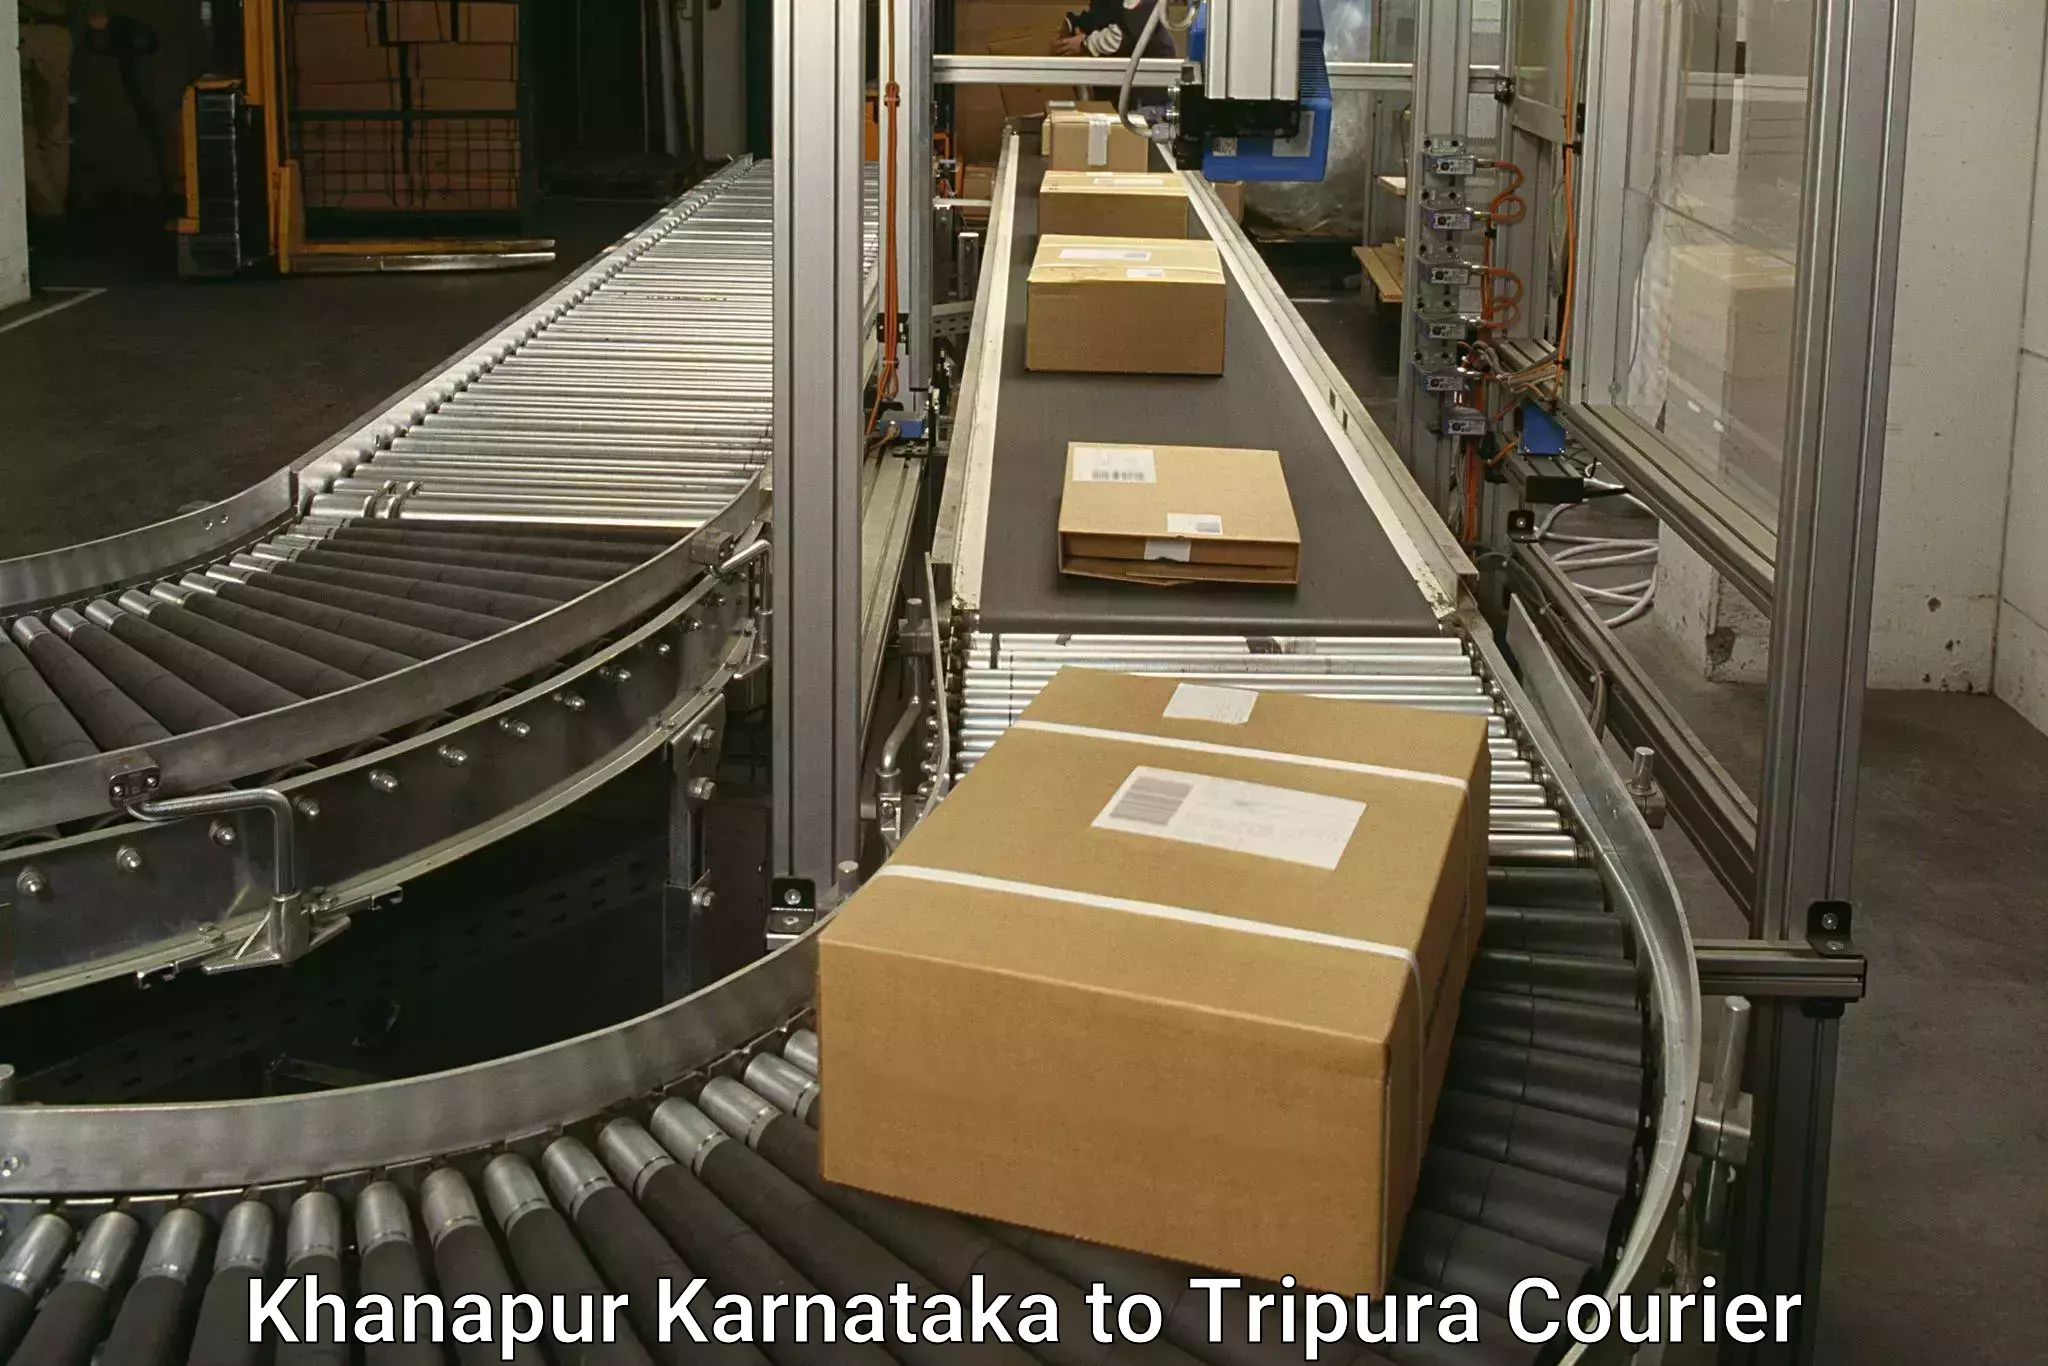 Reliable delivery network Khanapur Karnataka to North Tripura